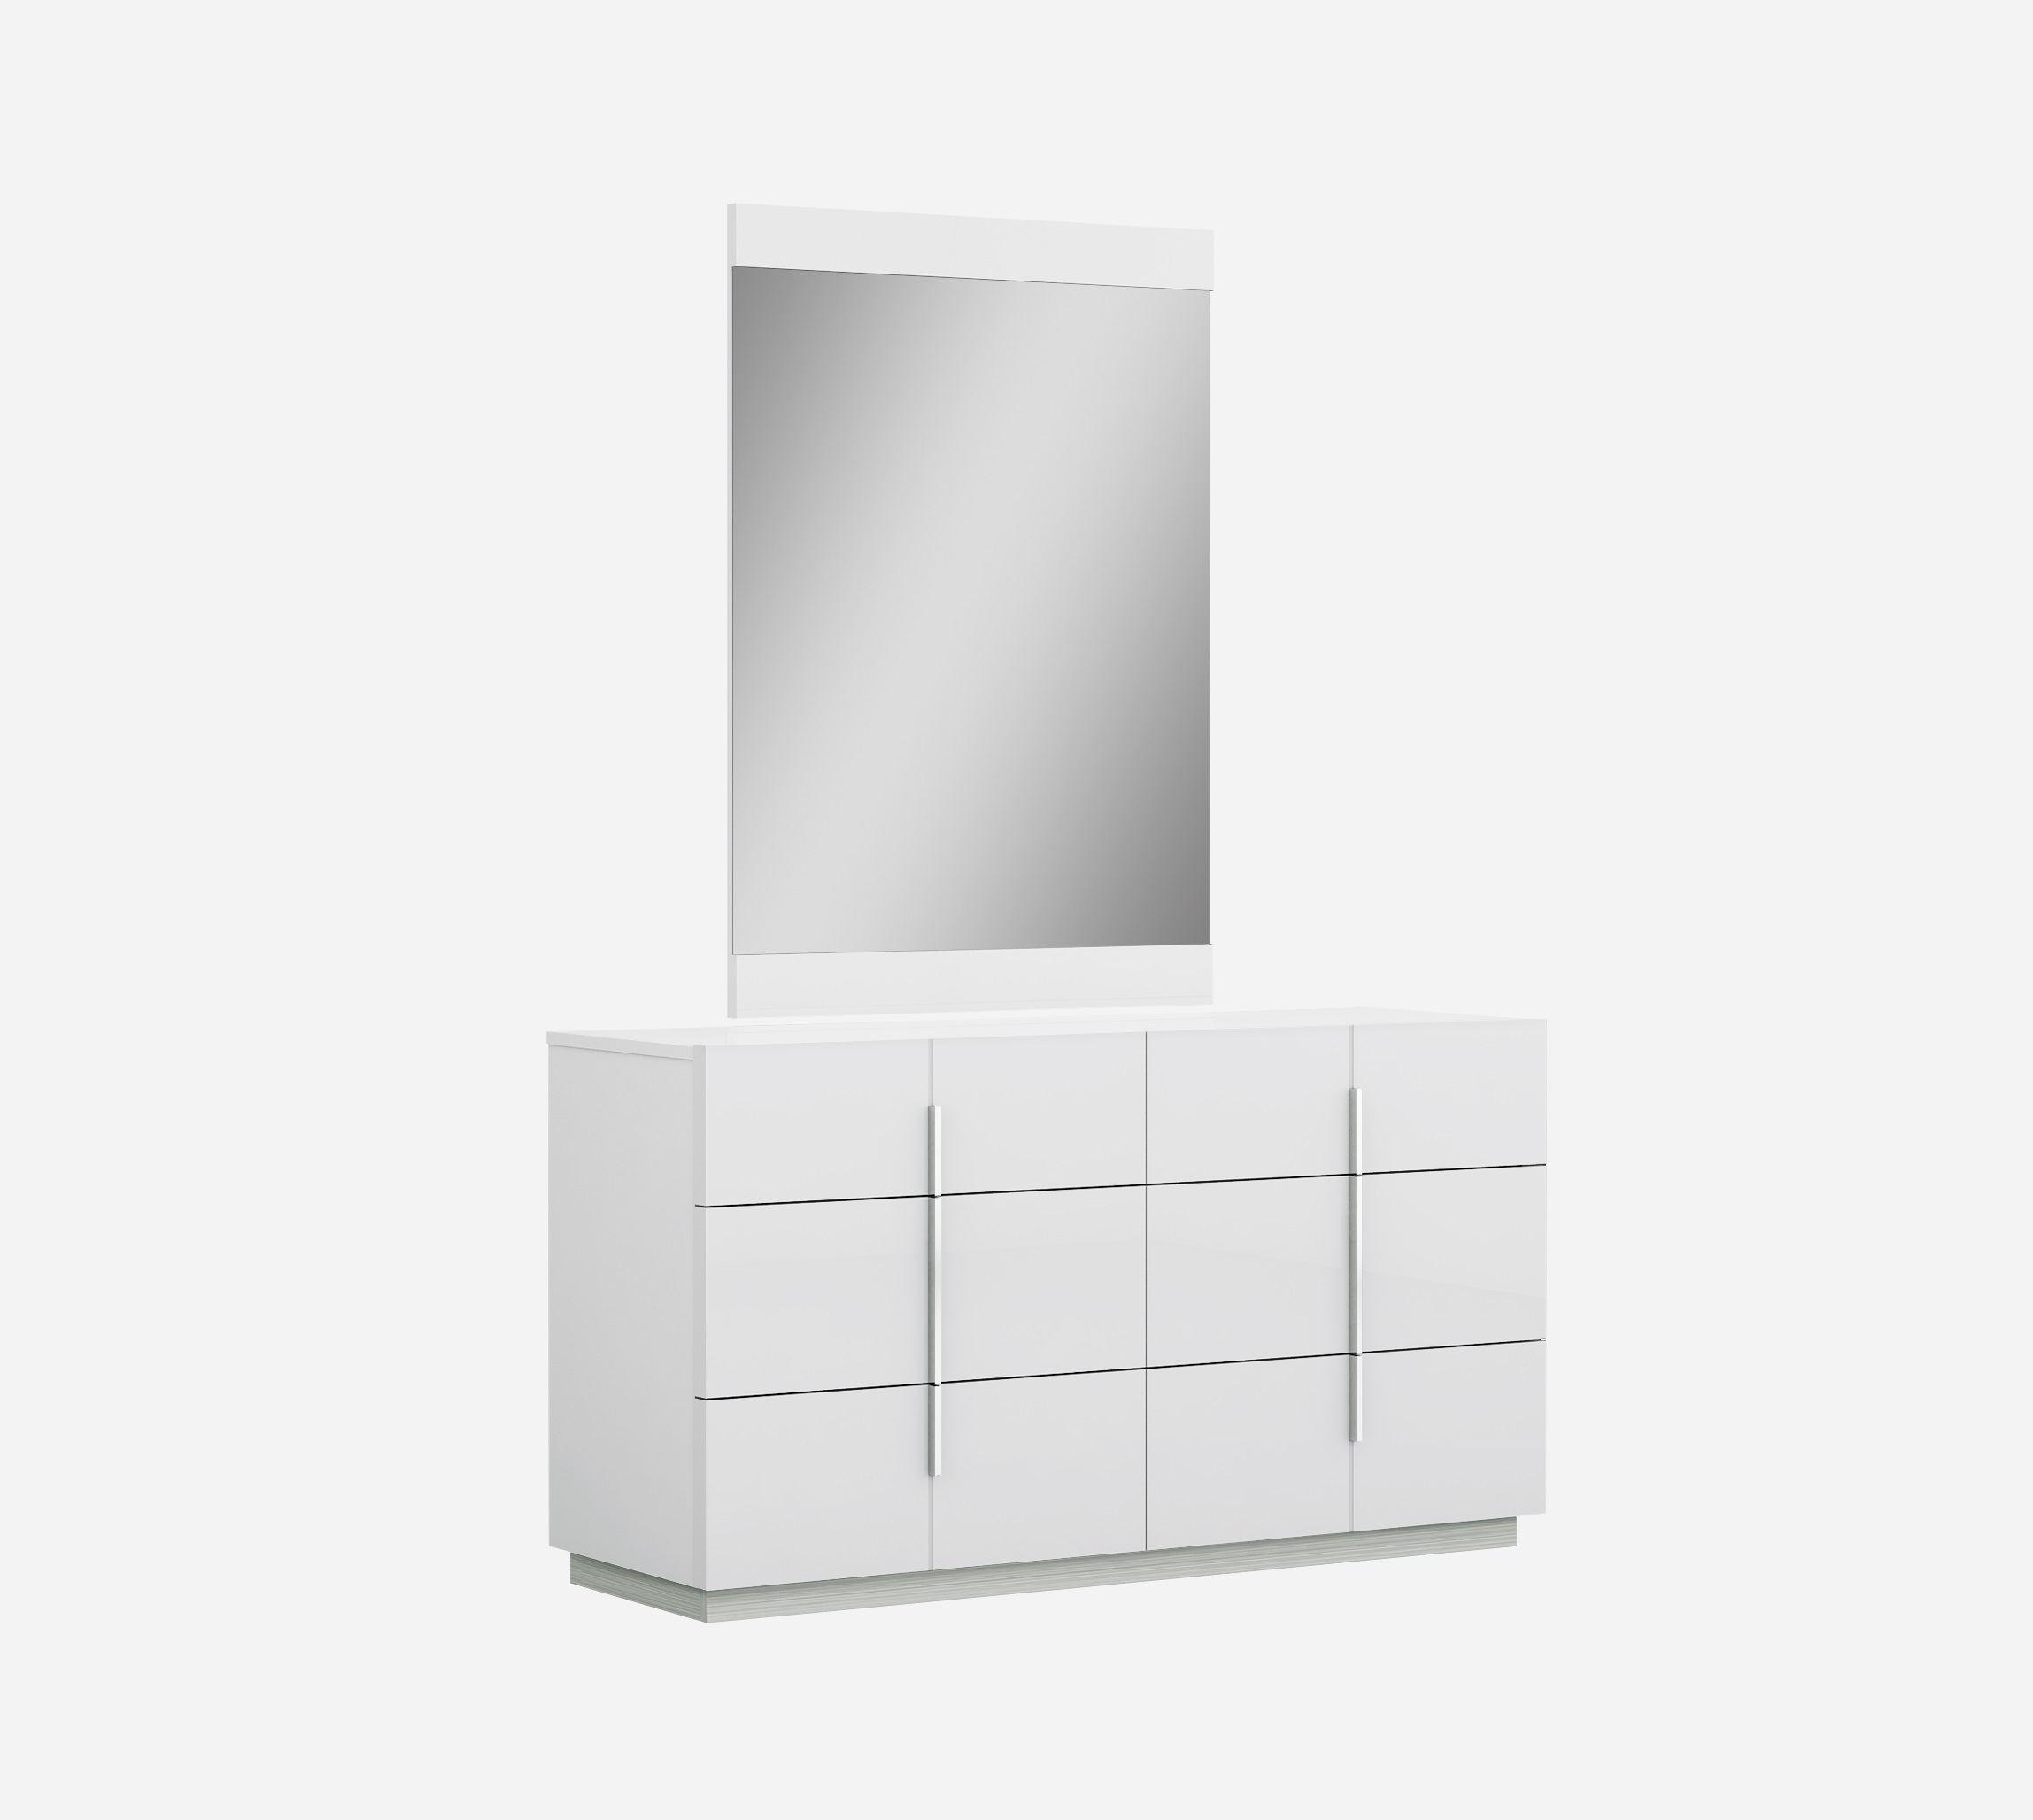 Elegant Quality Contemporary Platform Bedroom Sets